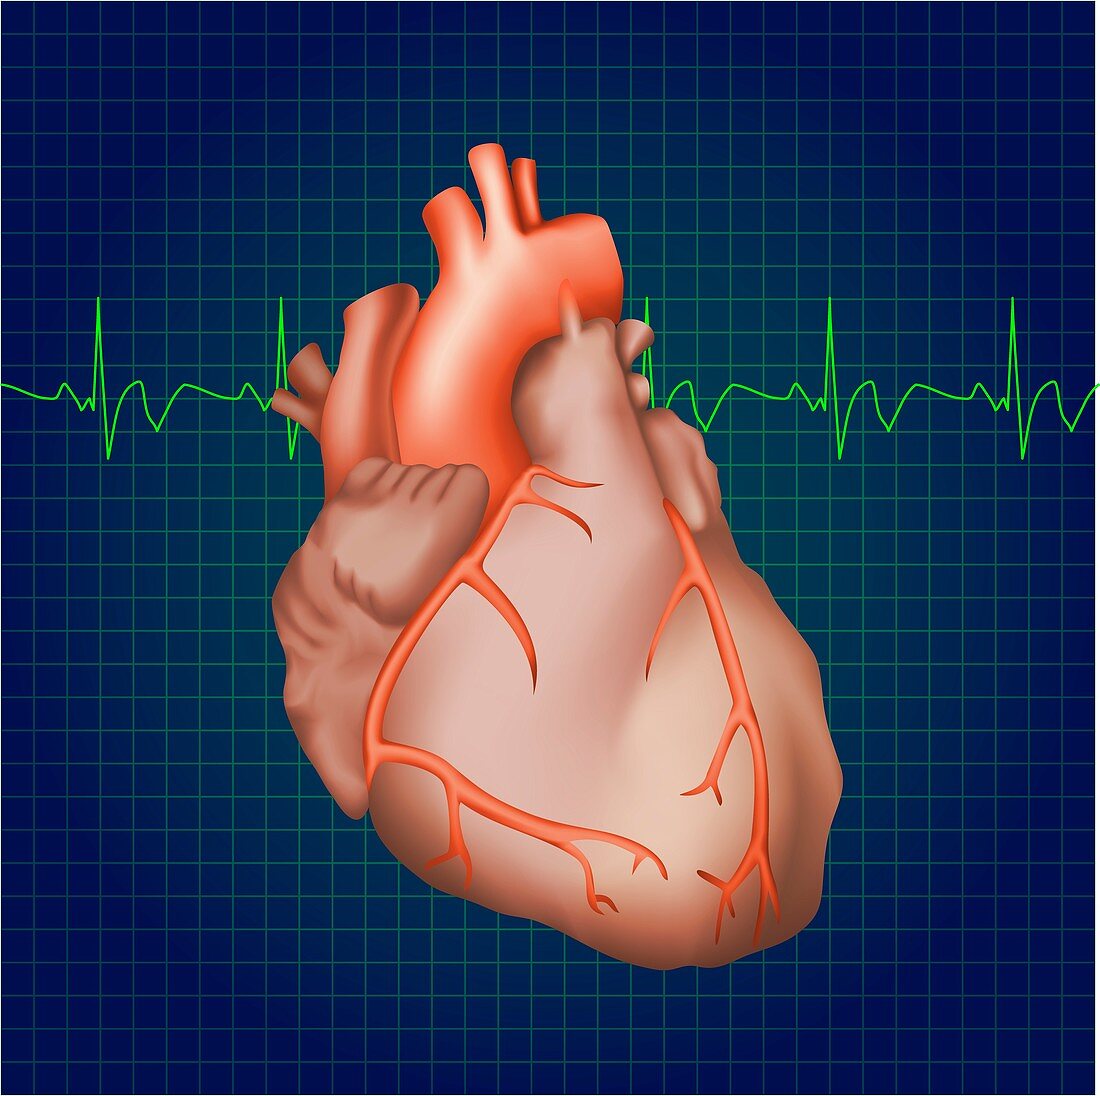 Healthy human heart, illustration